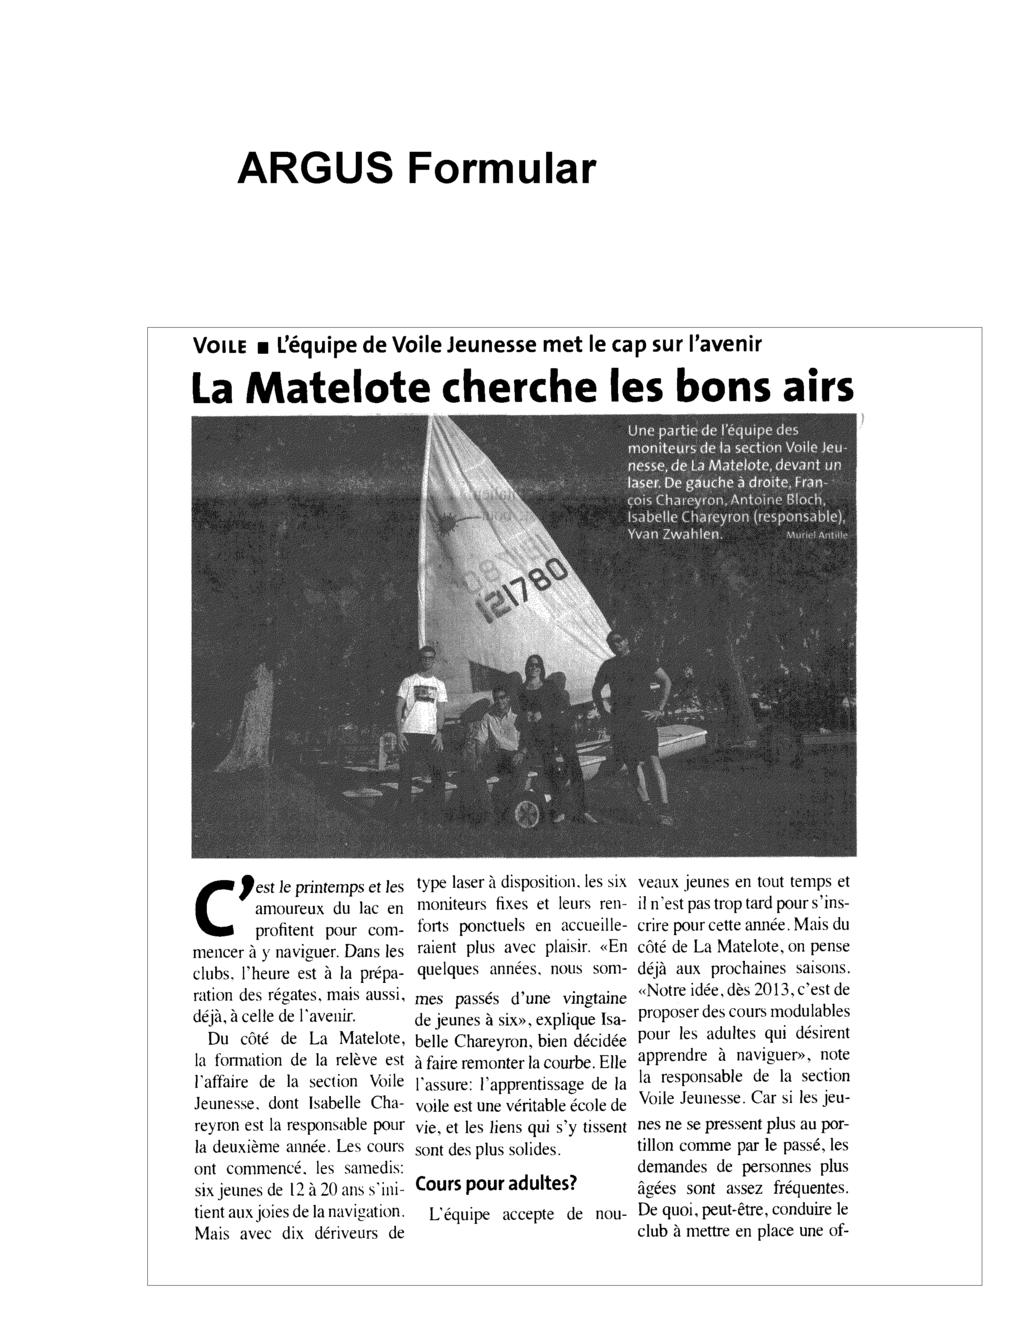 La Région Nord vaudois 18.05.2012 Seite 1 / 2 Auflage/ Seite 39469 / 16 6064 Ausgaben 0 / J.